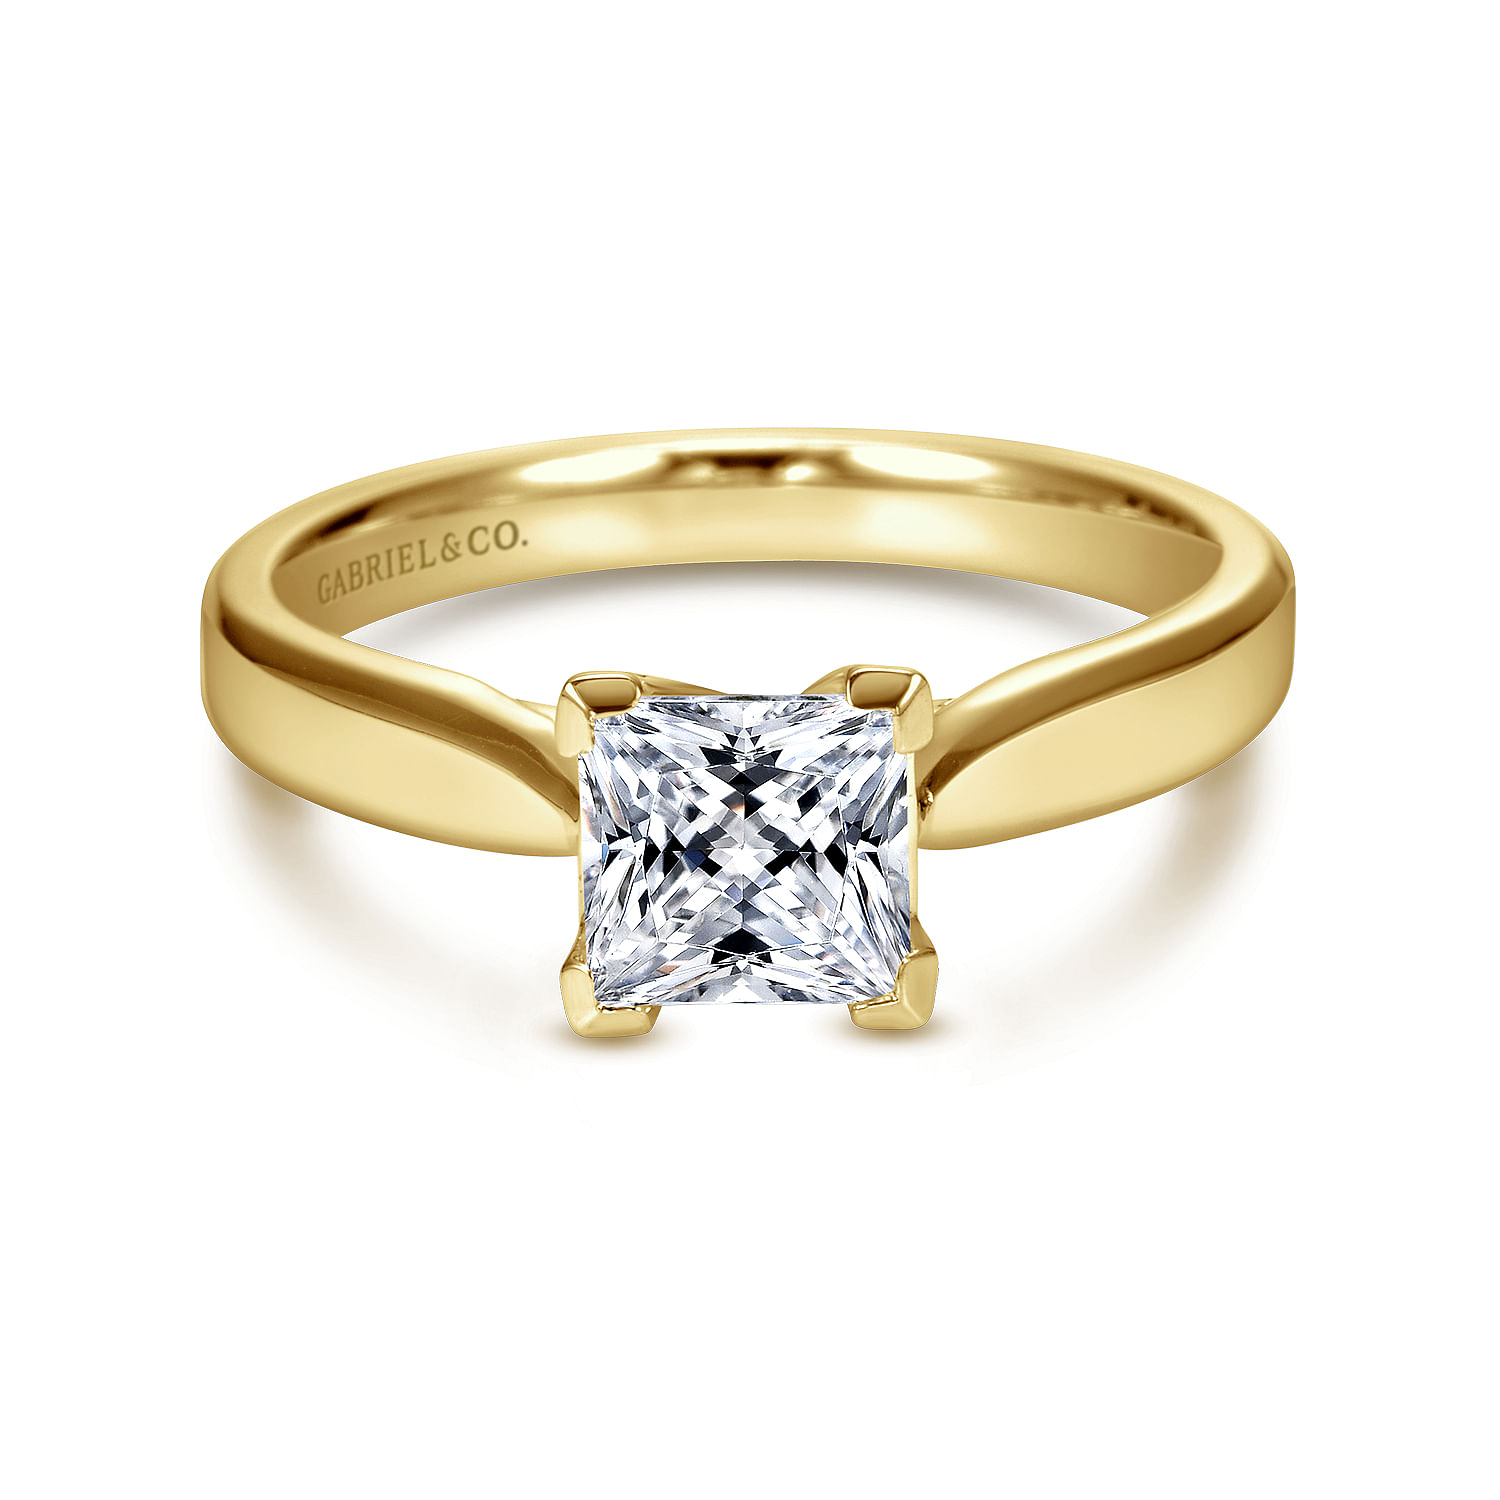 Gabriel - 14K Yellow Gold Princess Cut Diamond Engagement Ring